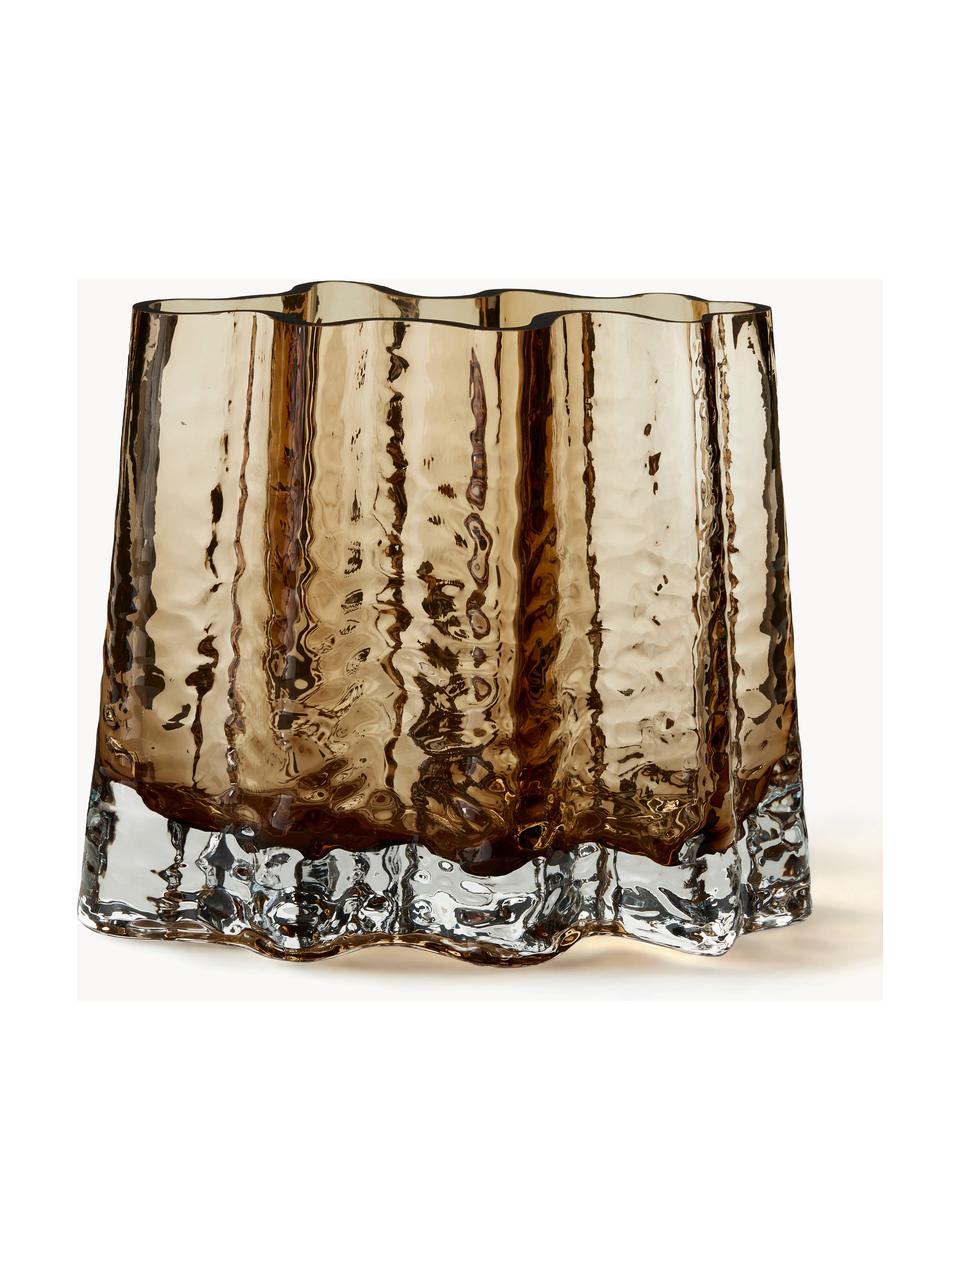 Mundgeblasene Glas-Vase Gry mit strukturierter Oberfläche, H 19 cm, Glas, mundgeblasen, Braun, semi-transparent, B 24 x H 19 cm